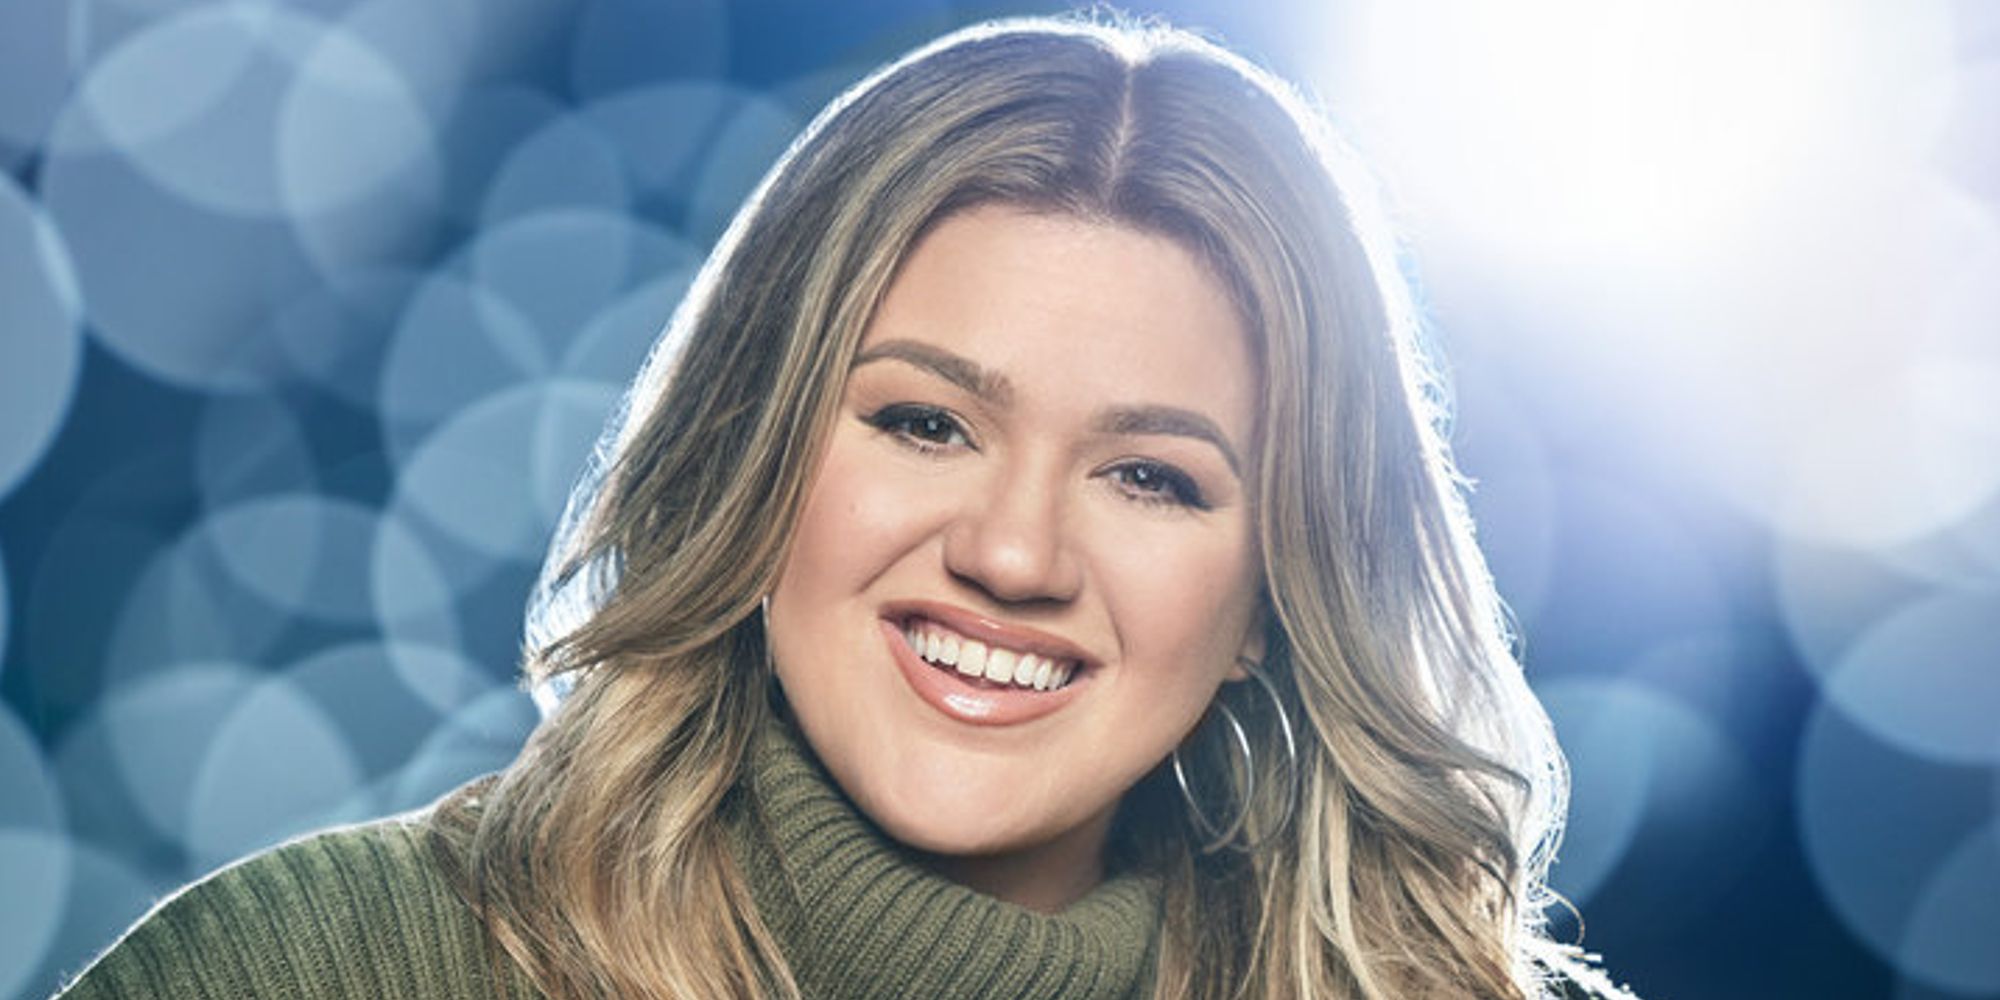 The Voice: Kelly's Clarkson's Music Featured In Hallmark Christmas Movie